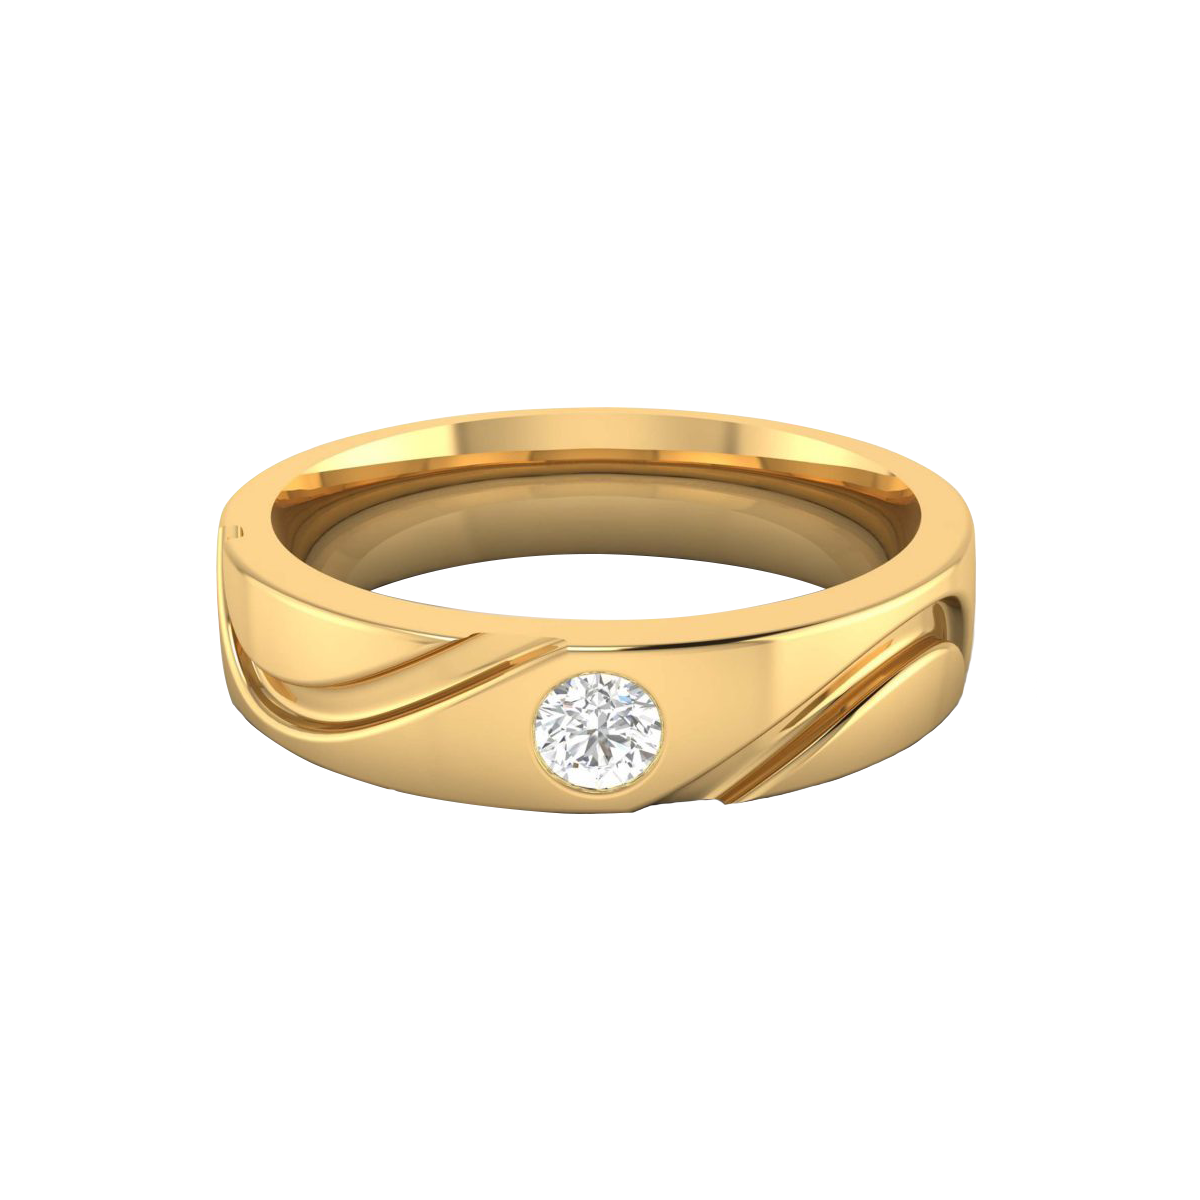 Men's Solitaire Diamond Ring